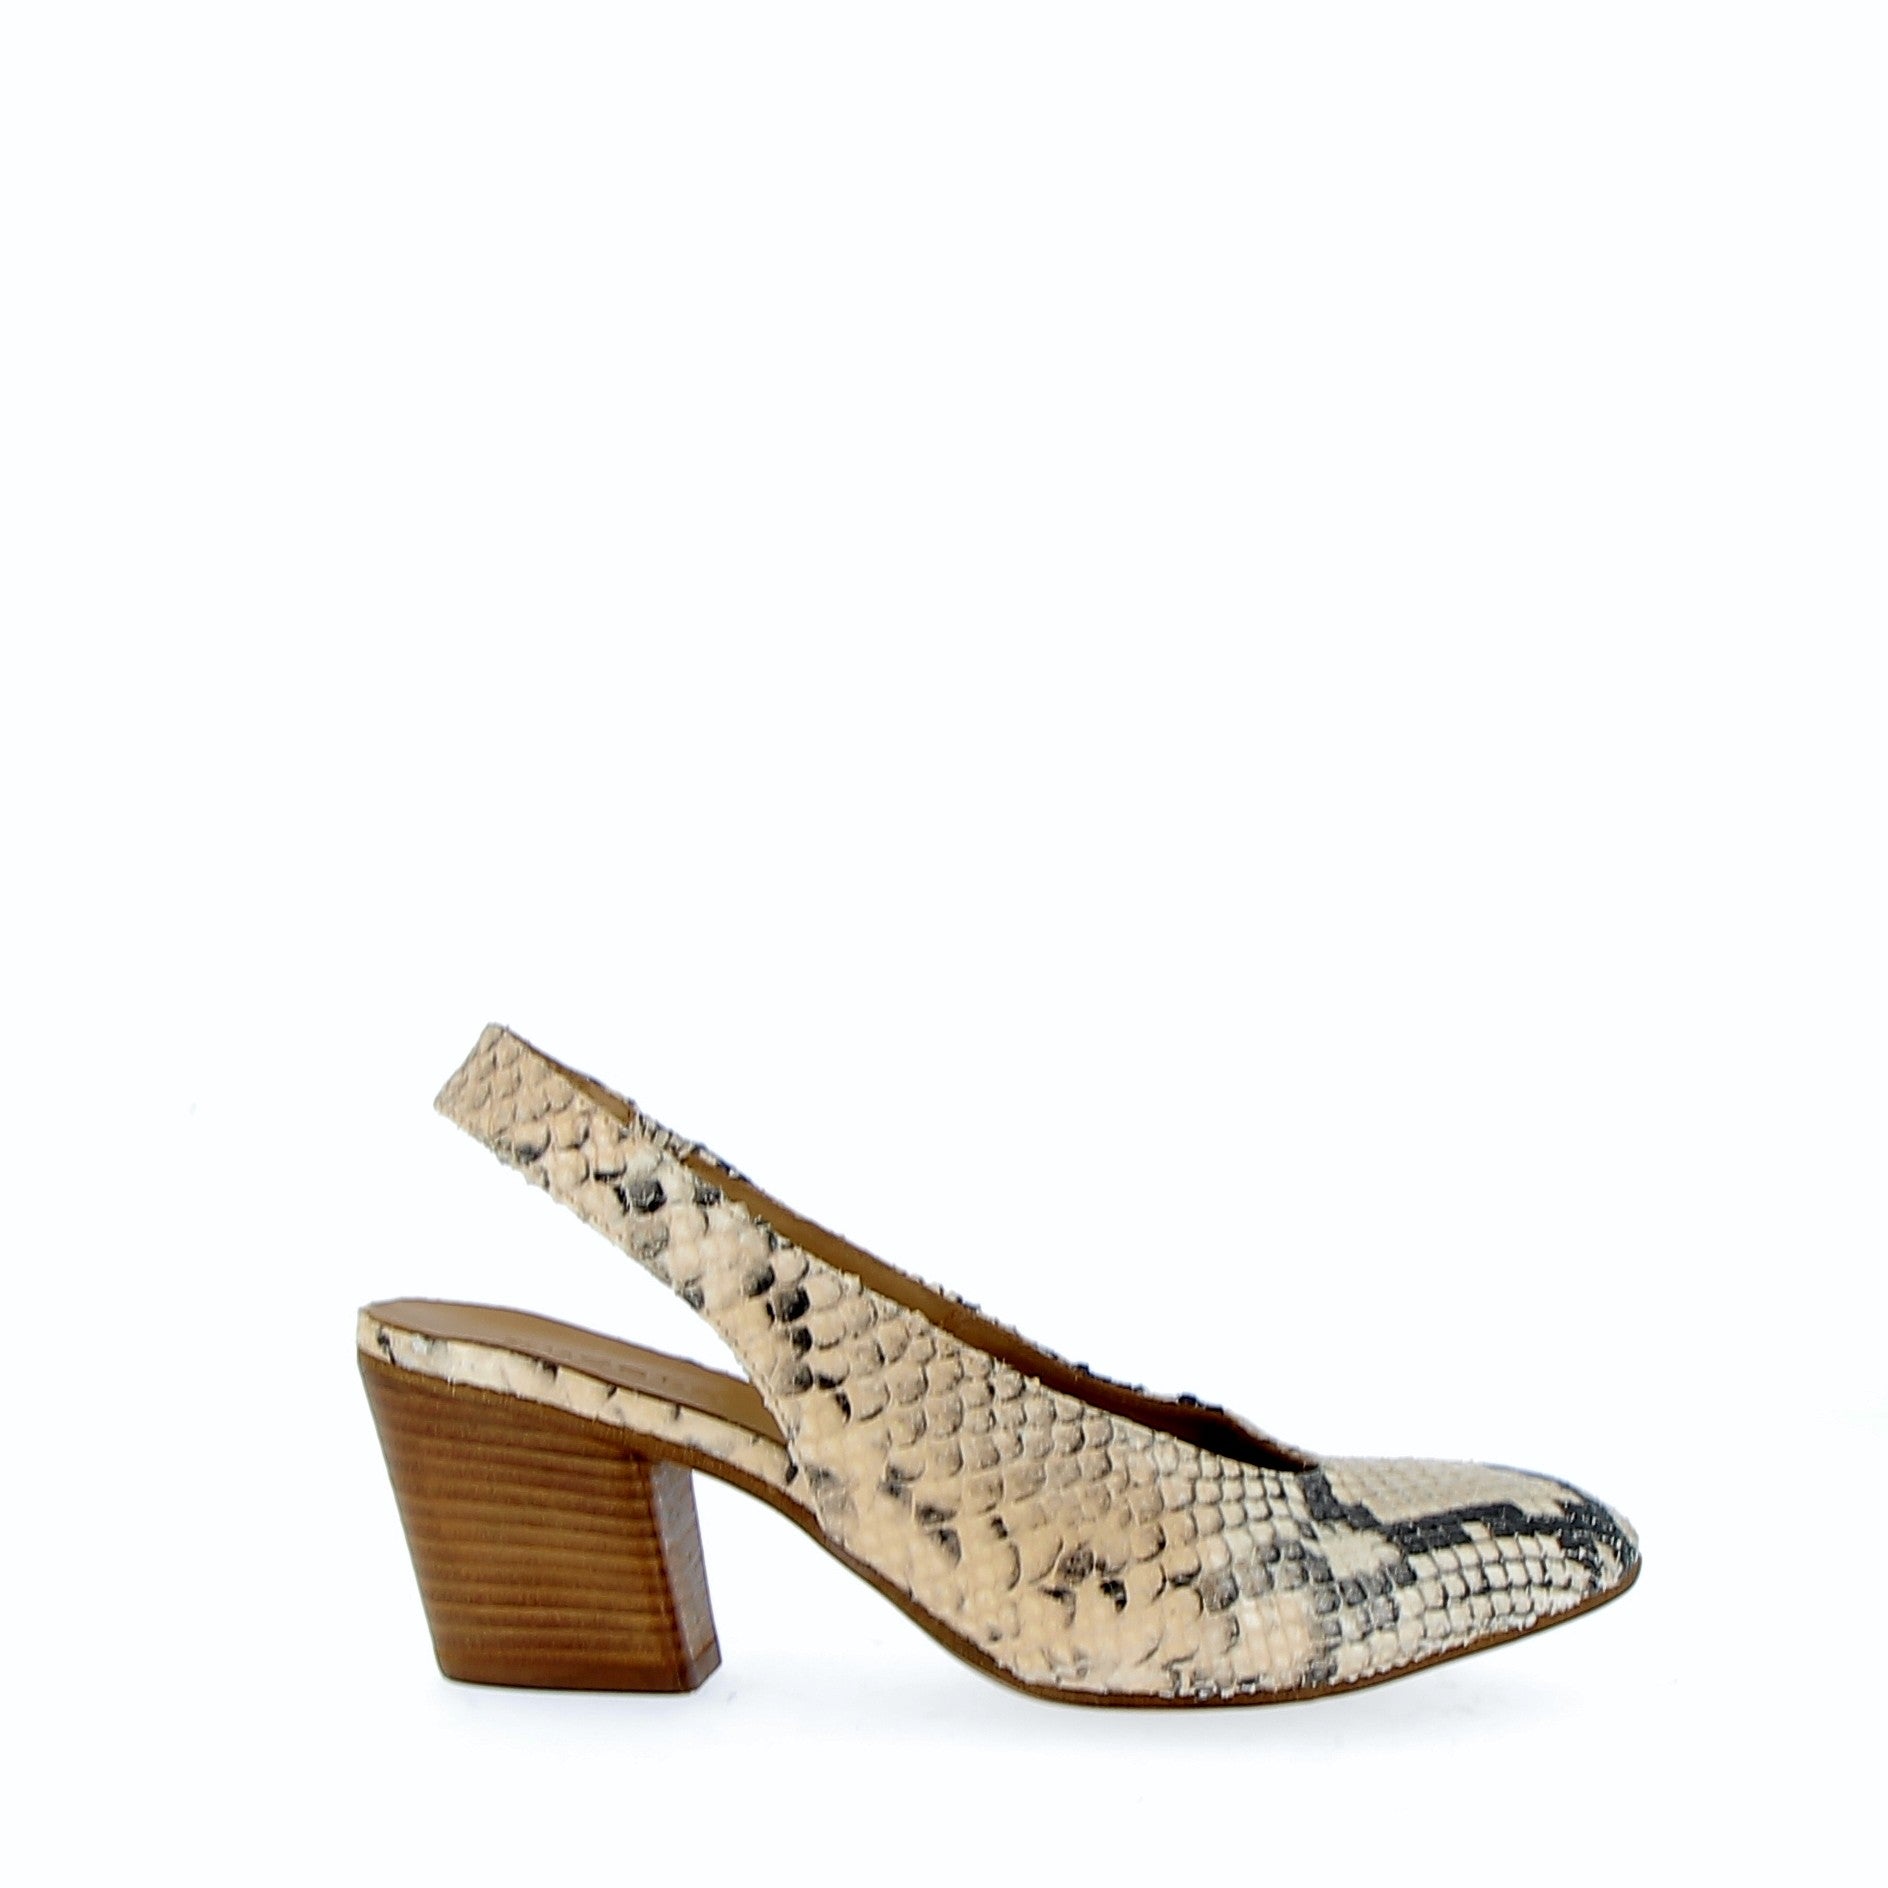 Chanel medium heel Phard color python finish